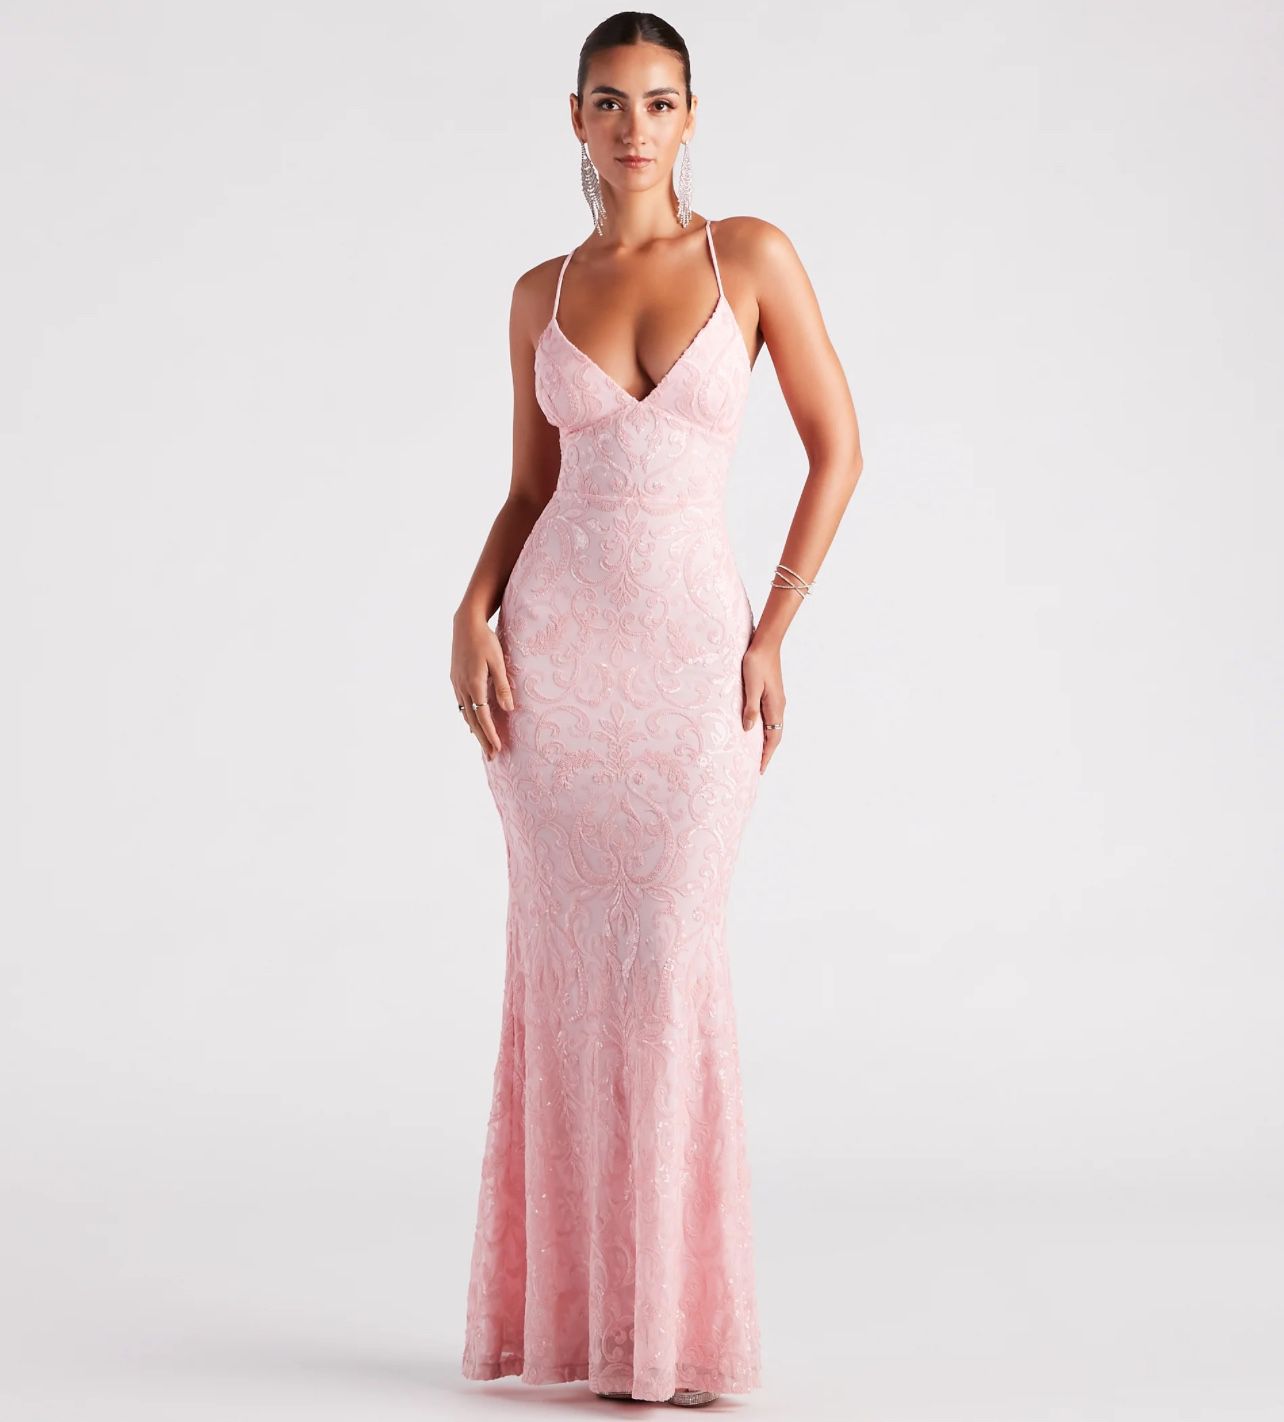 Pink Prom Dress